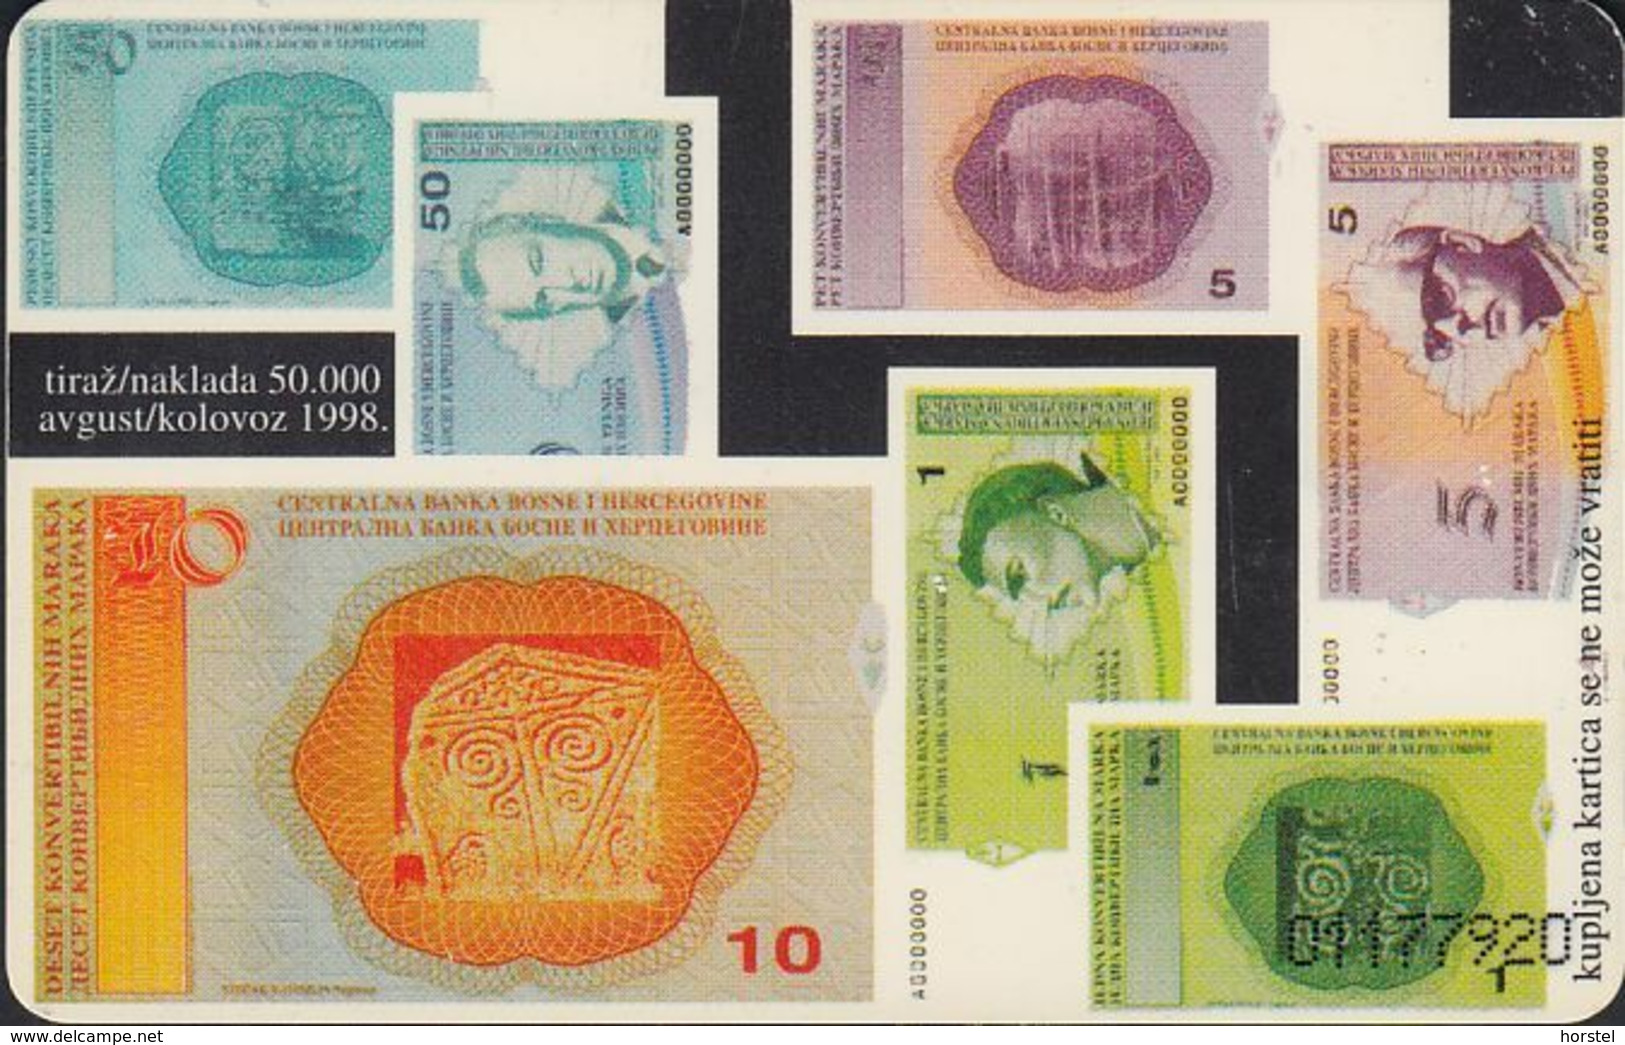 Bosnien Chip Nr.18 - Banknoten - 500 Imp. - Bosnien